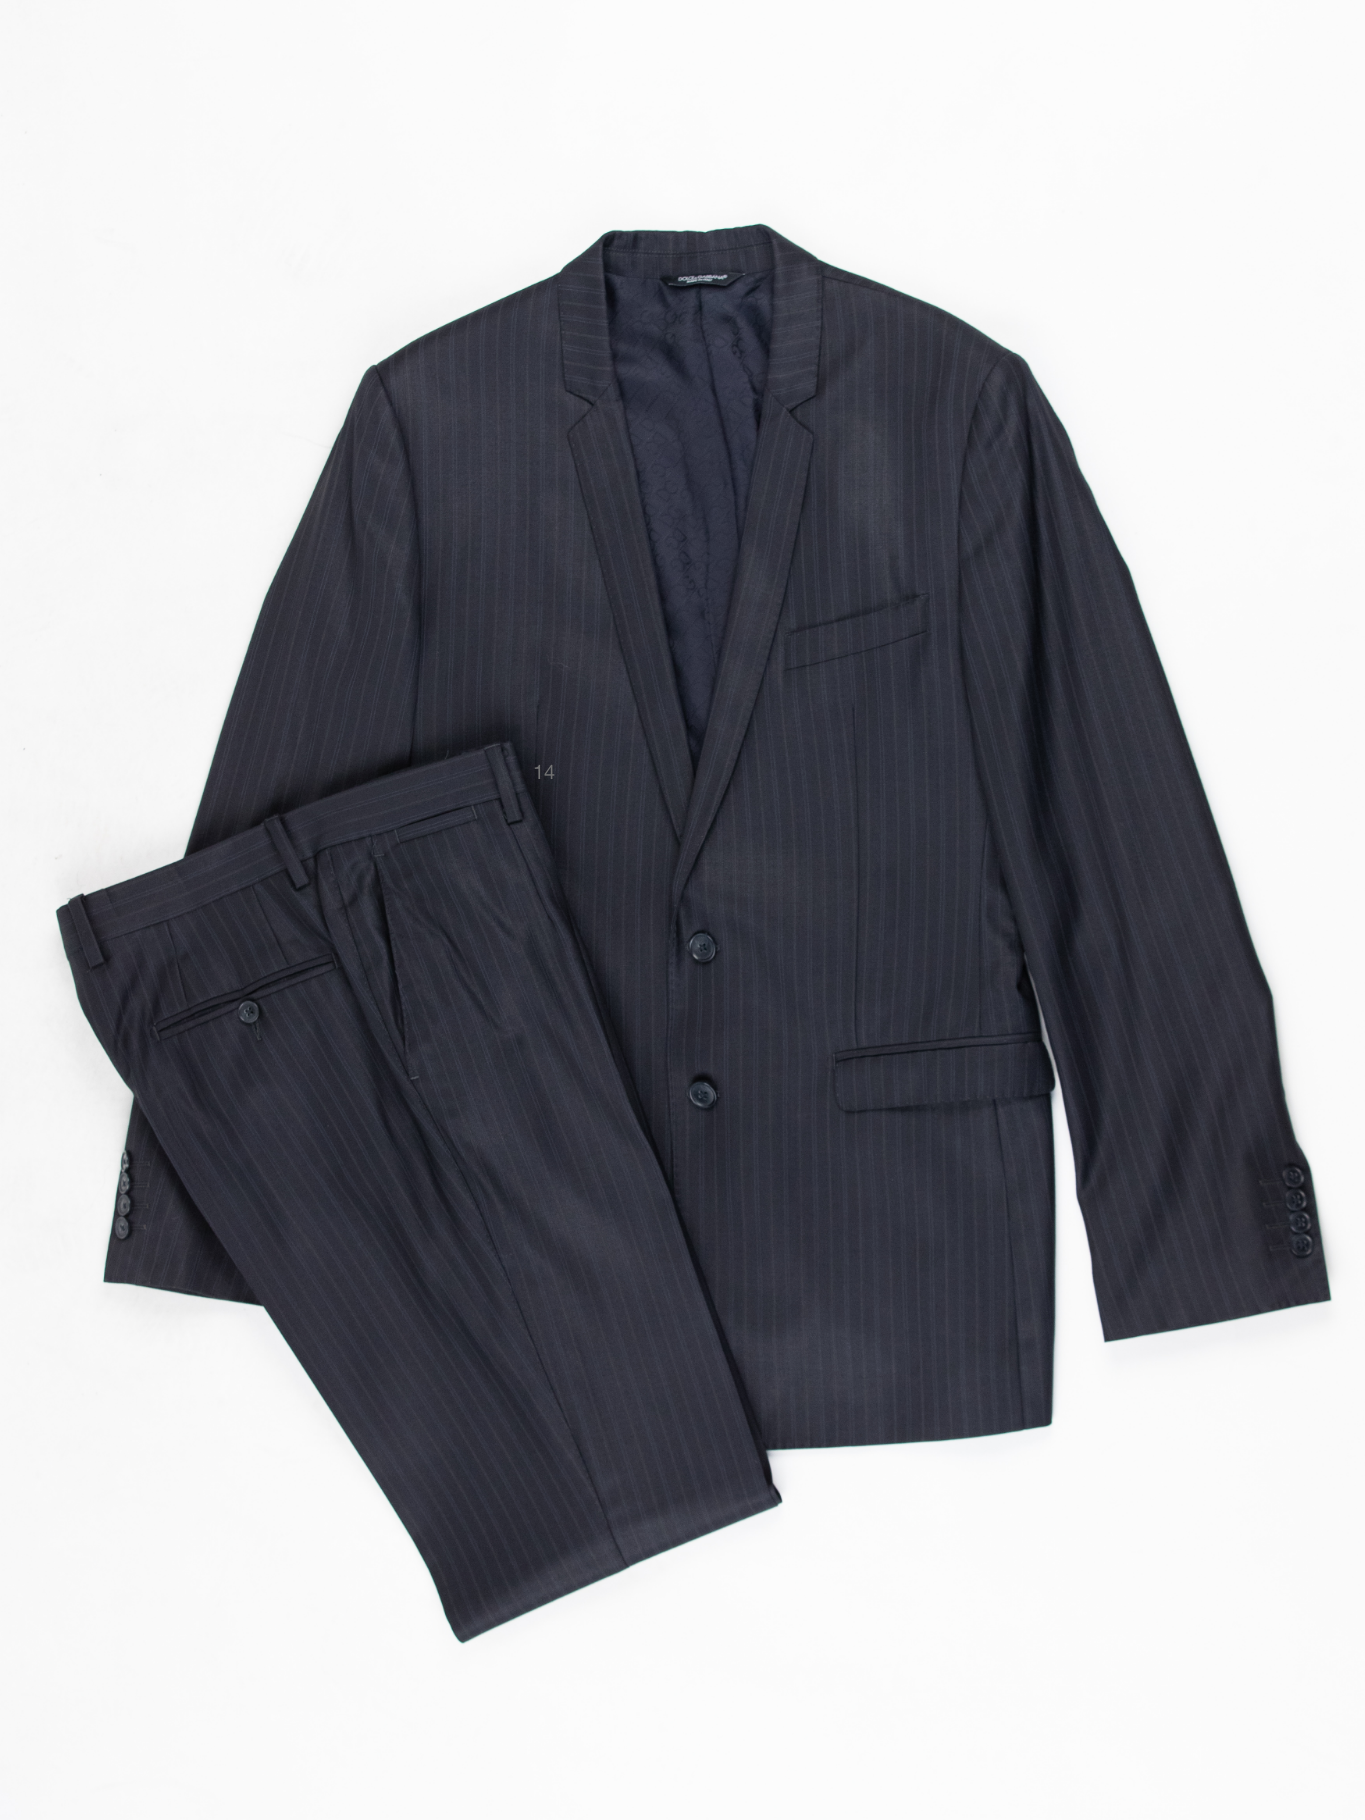 Grey/blue Pin Stripe Suit